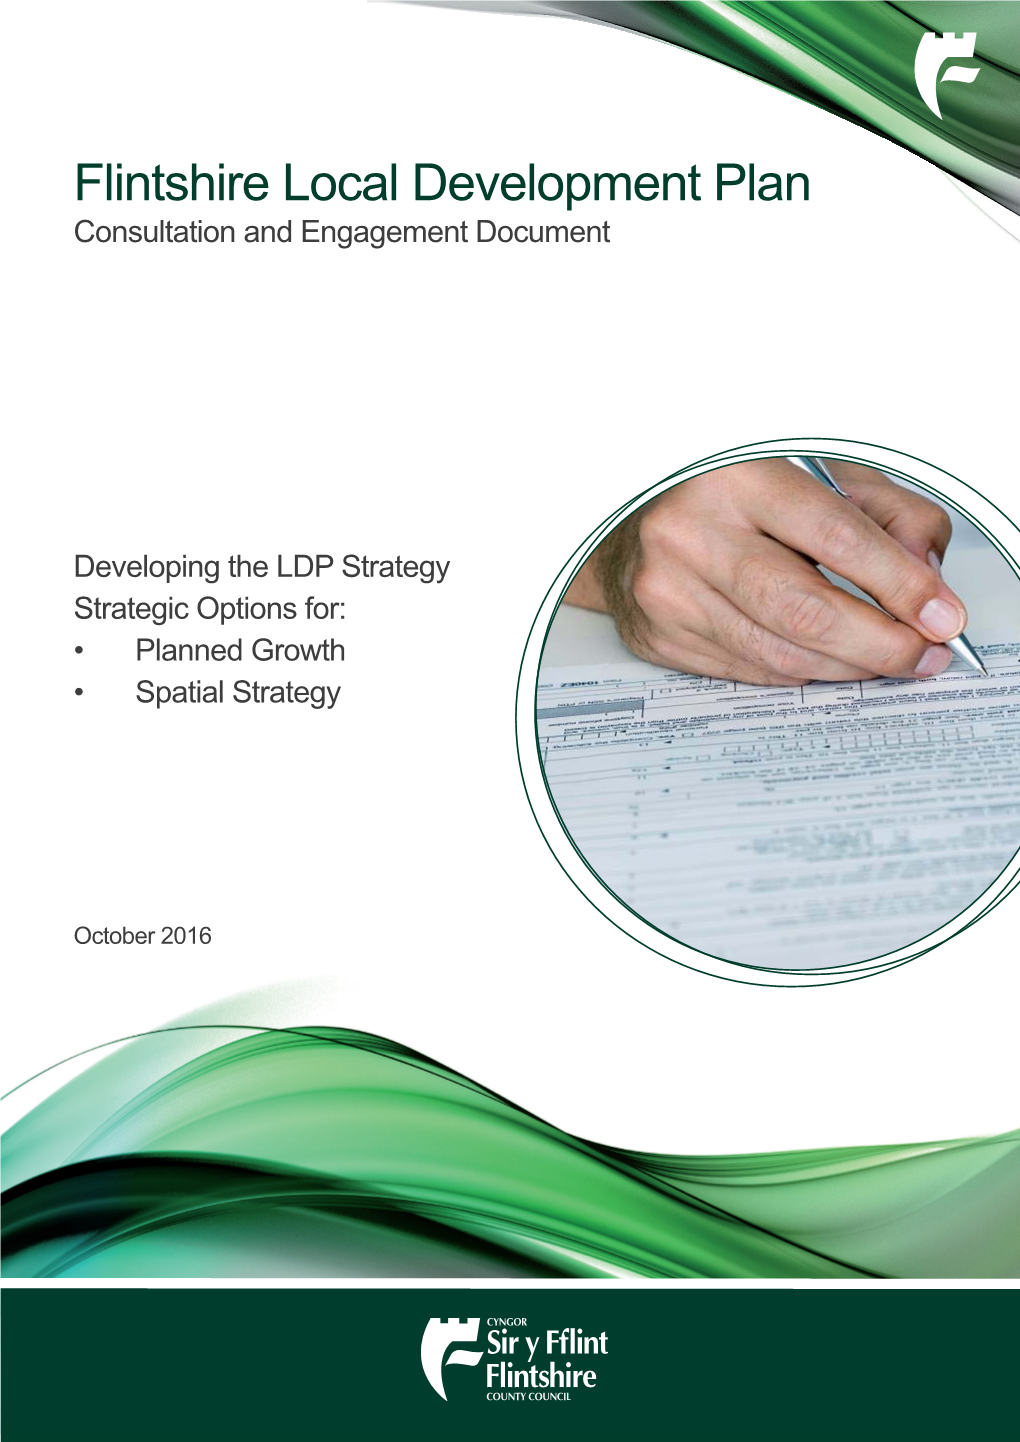 The Main 'Strategic Options' Consultation Document